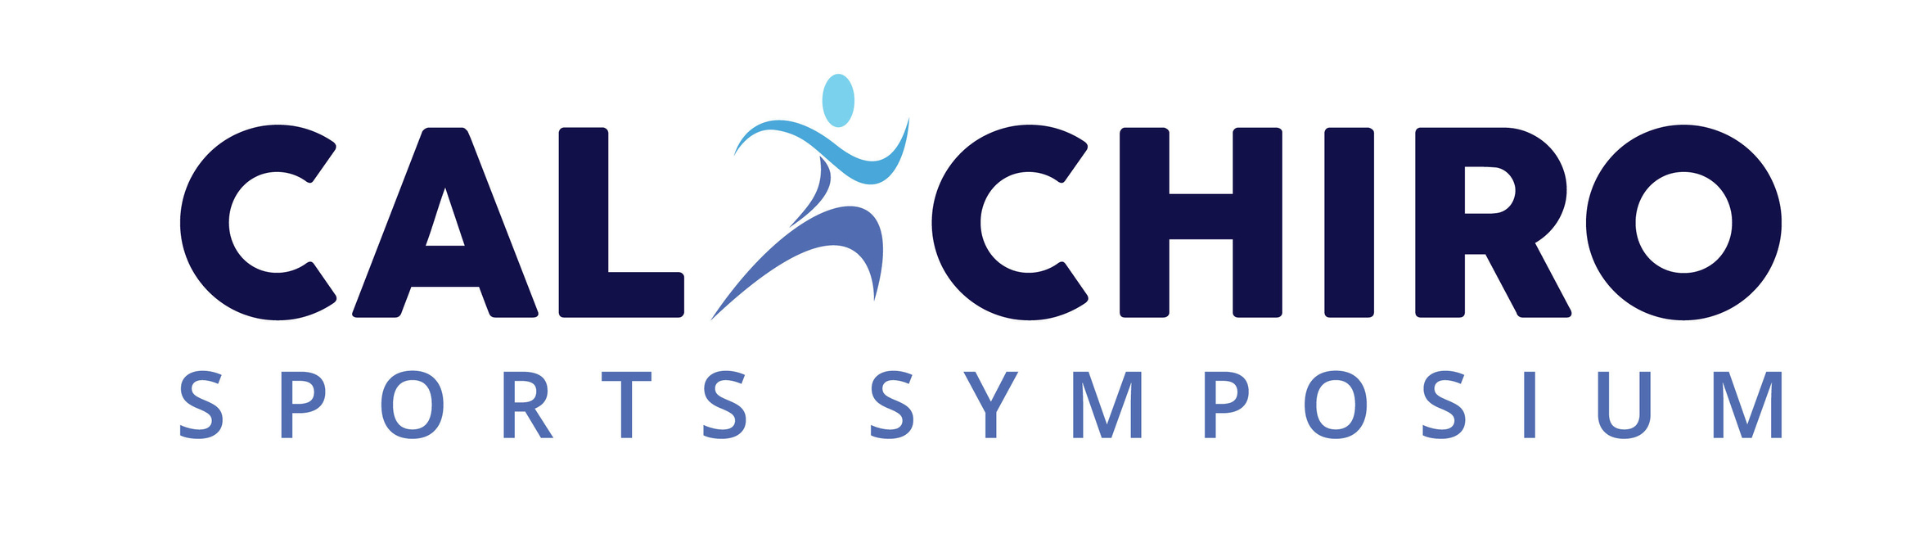 sports symposium logo